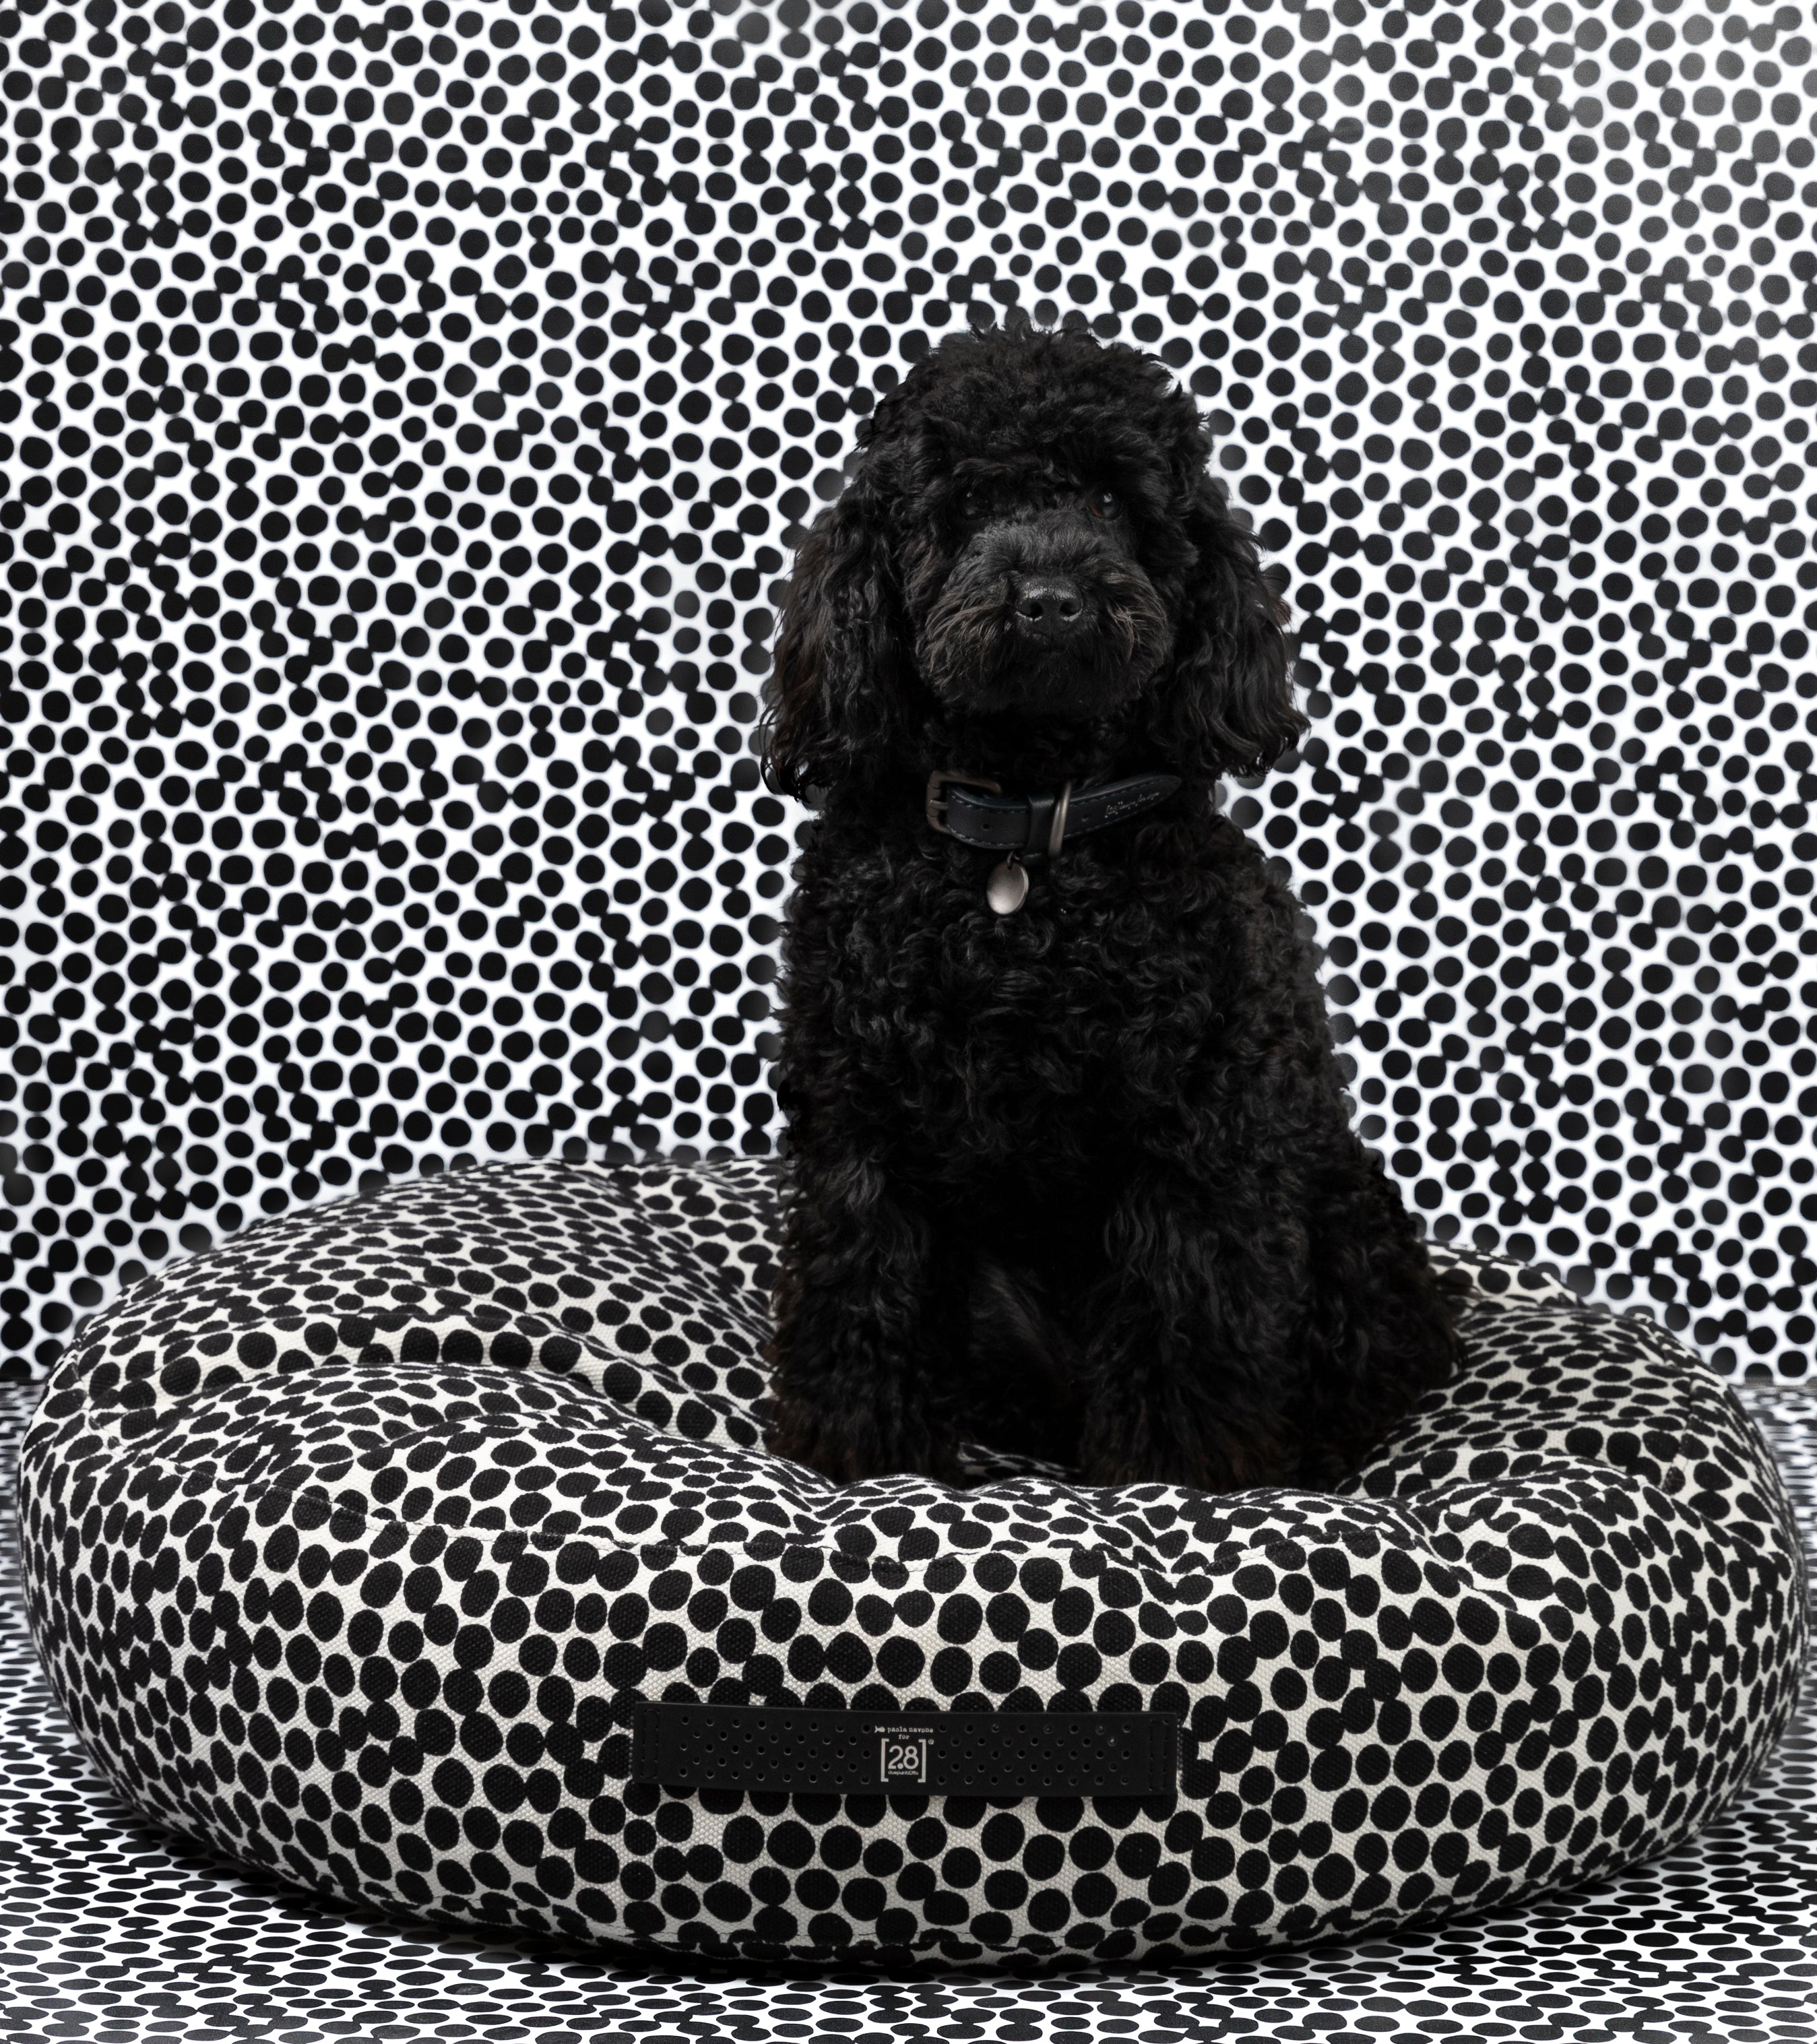 dotto-collection-paola-navone-dog-cushion-5.jpg